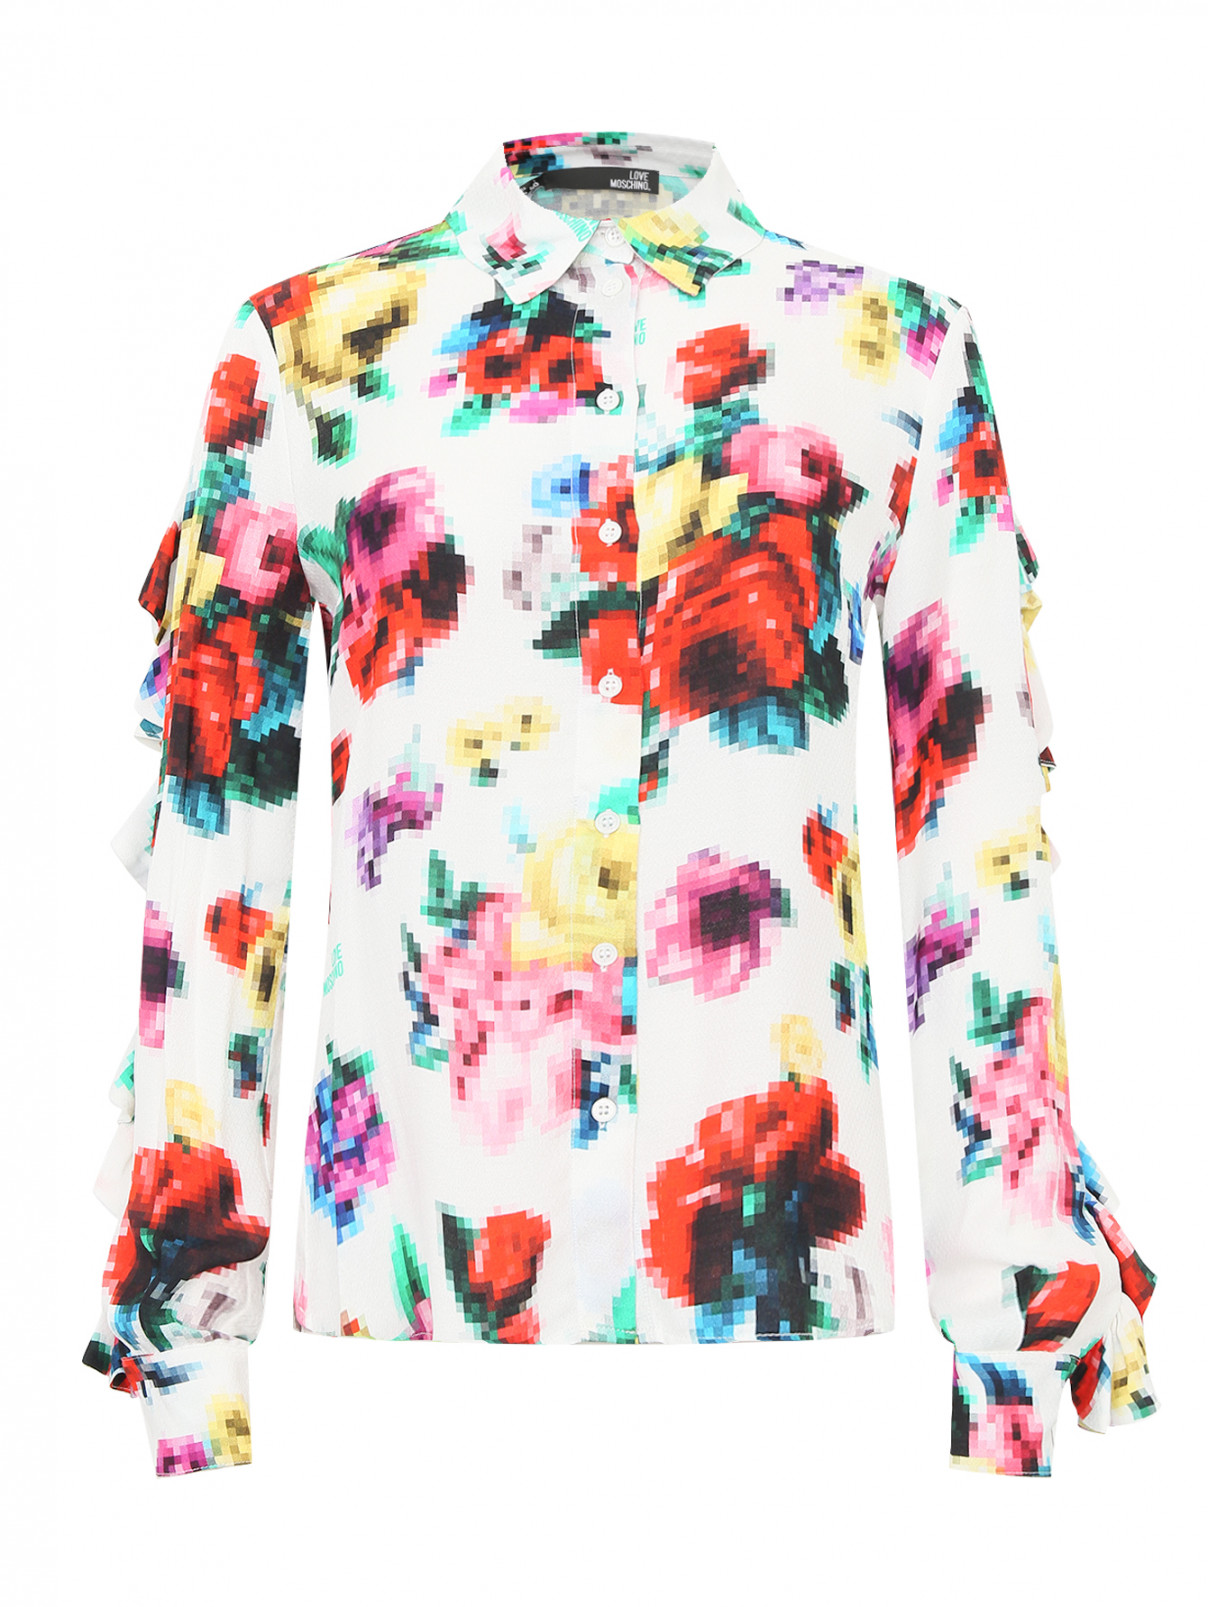 Блуза с узором Moschino  –  Общий вид  – Цвет:  Узор